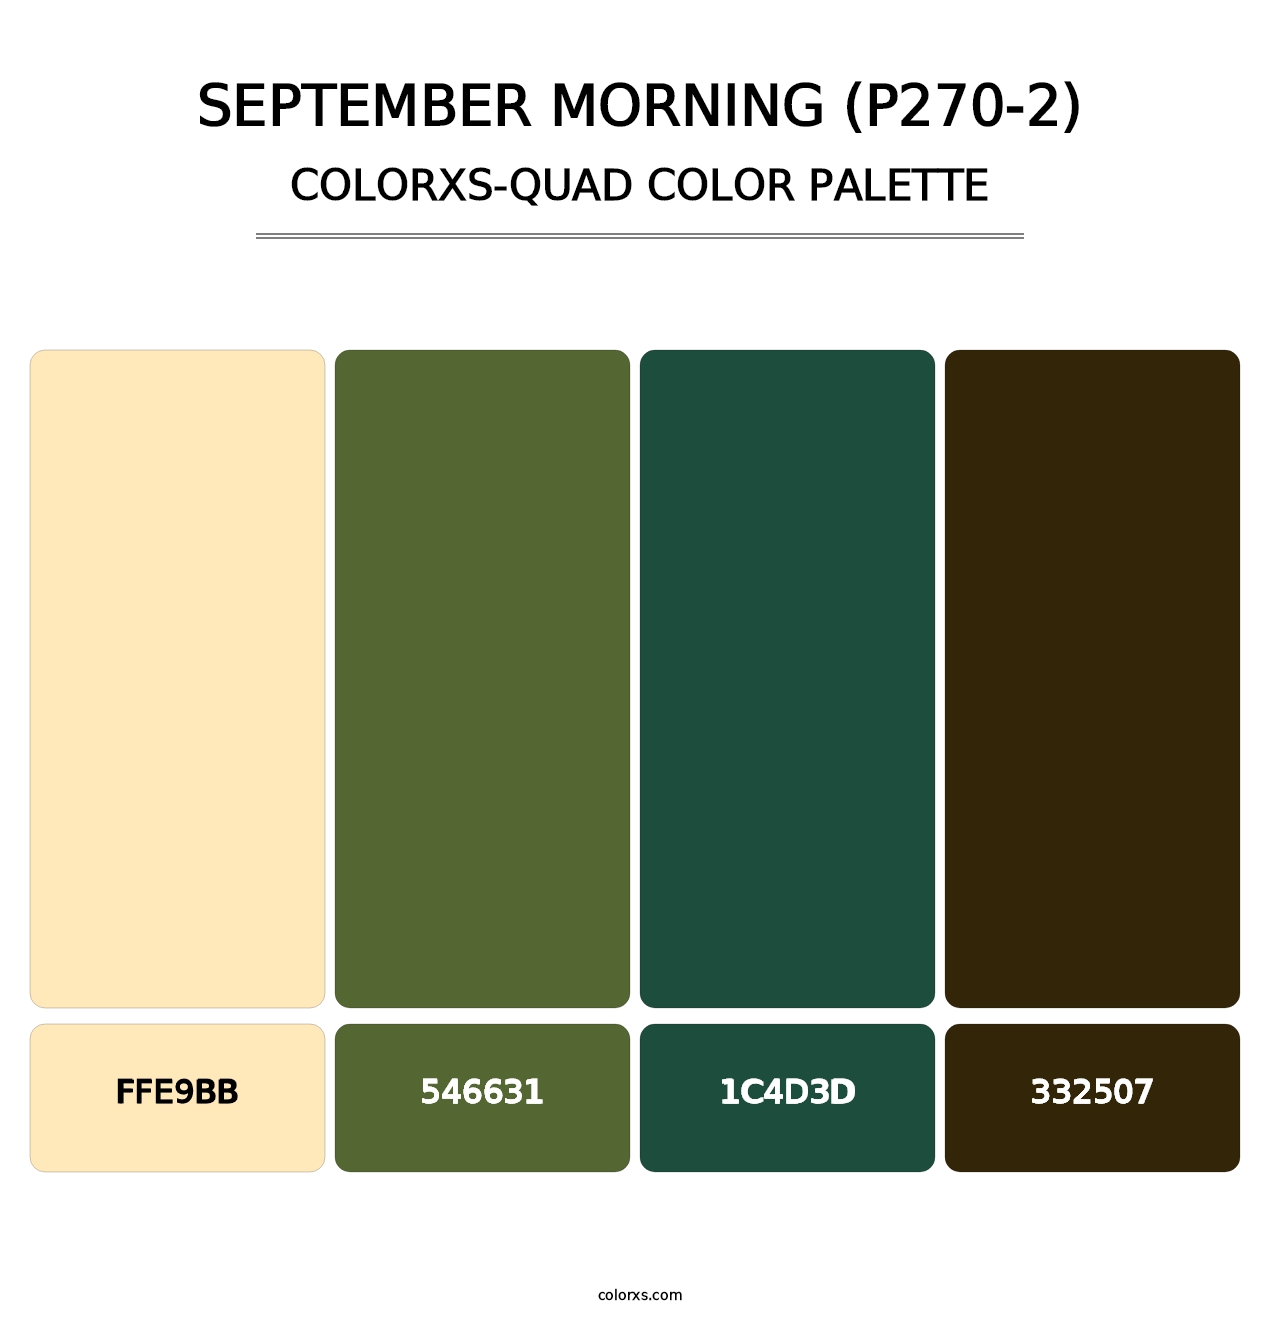 September Morning (P270-2) - Colorxs Quad Palette